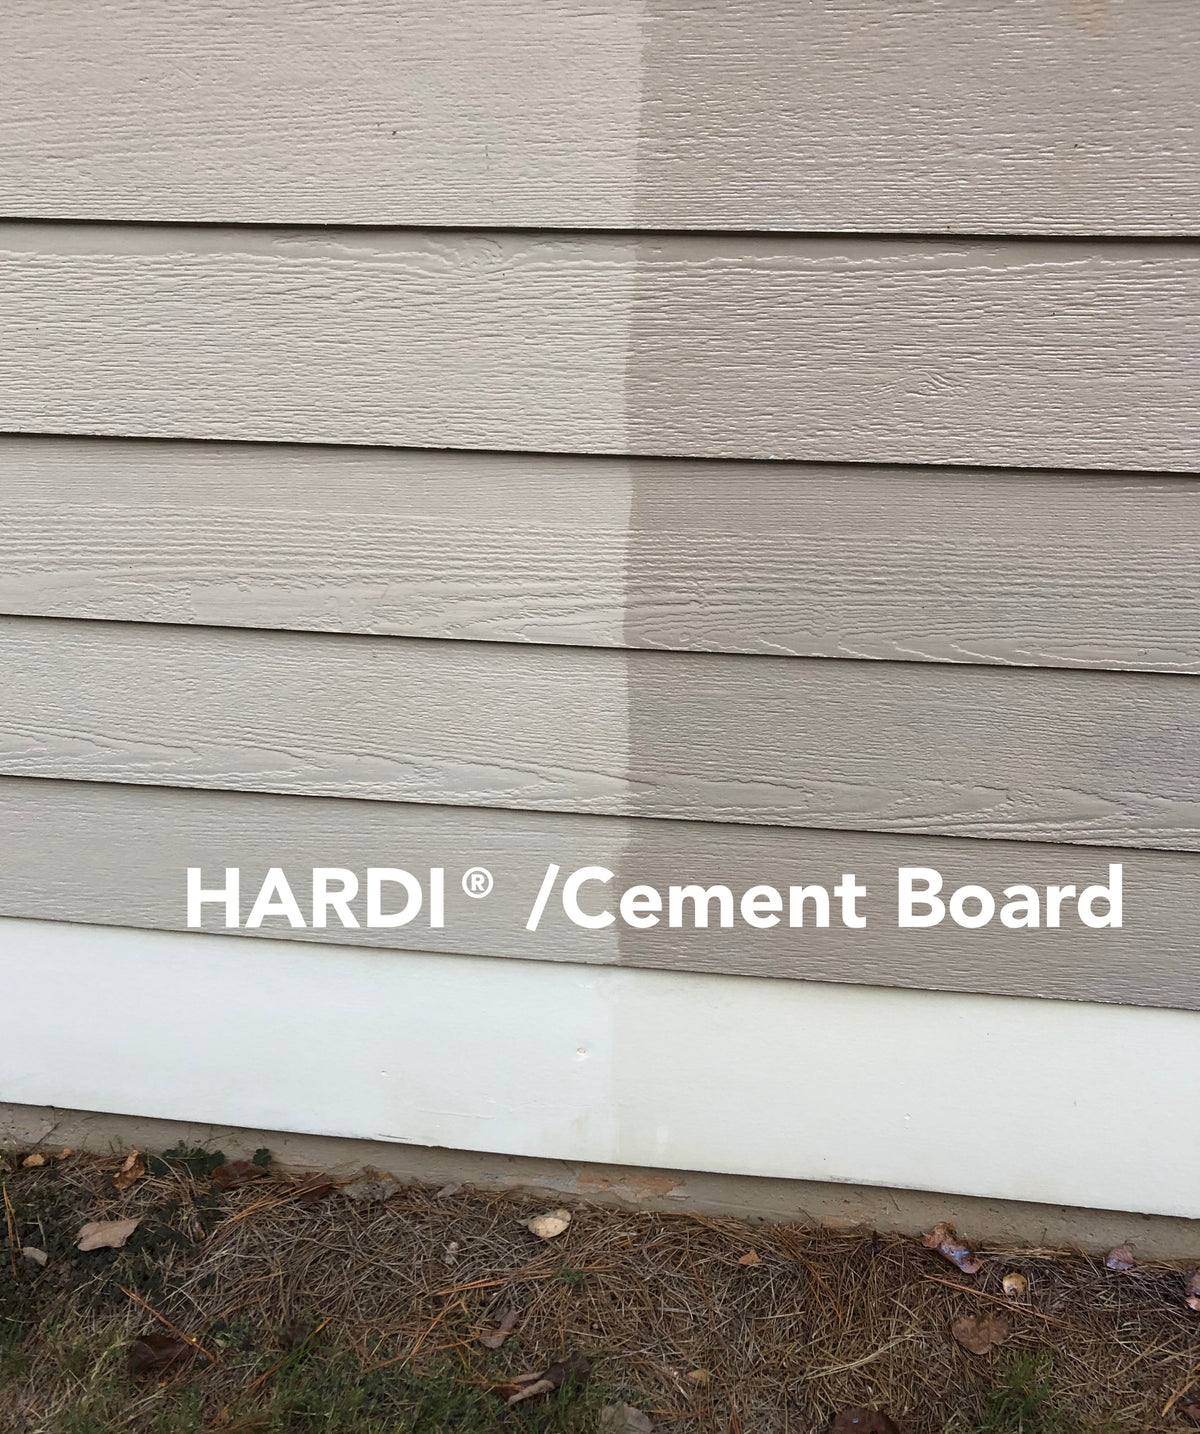 Hardi/Cement Board Before And After Color Restored With Vinyl Renu Color Vinyl Siding Restorer